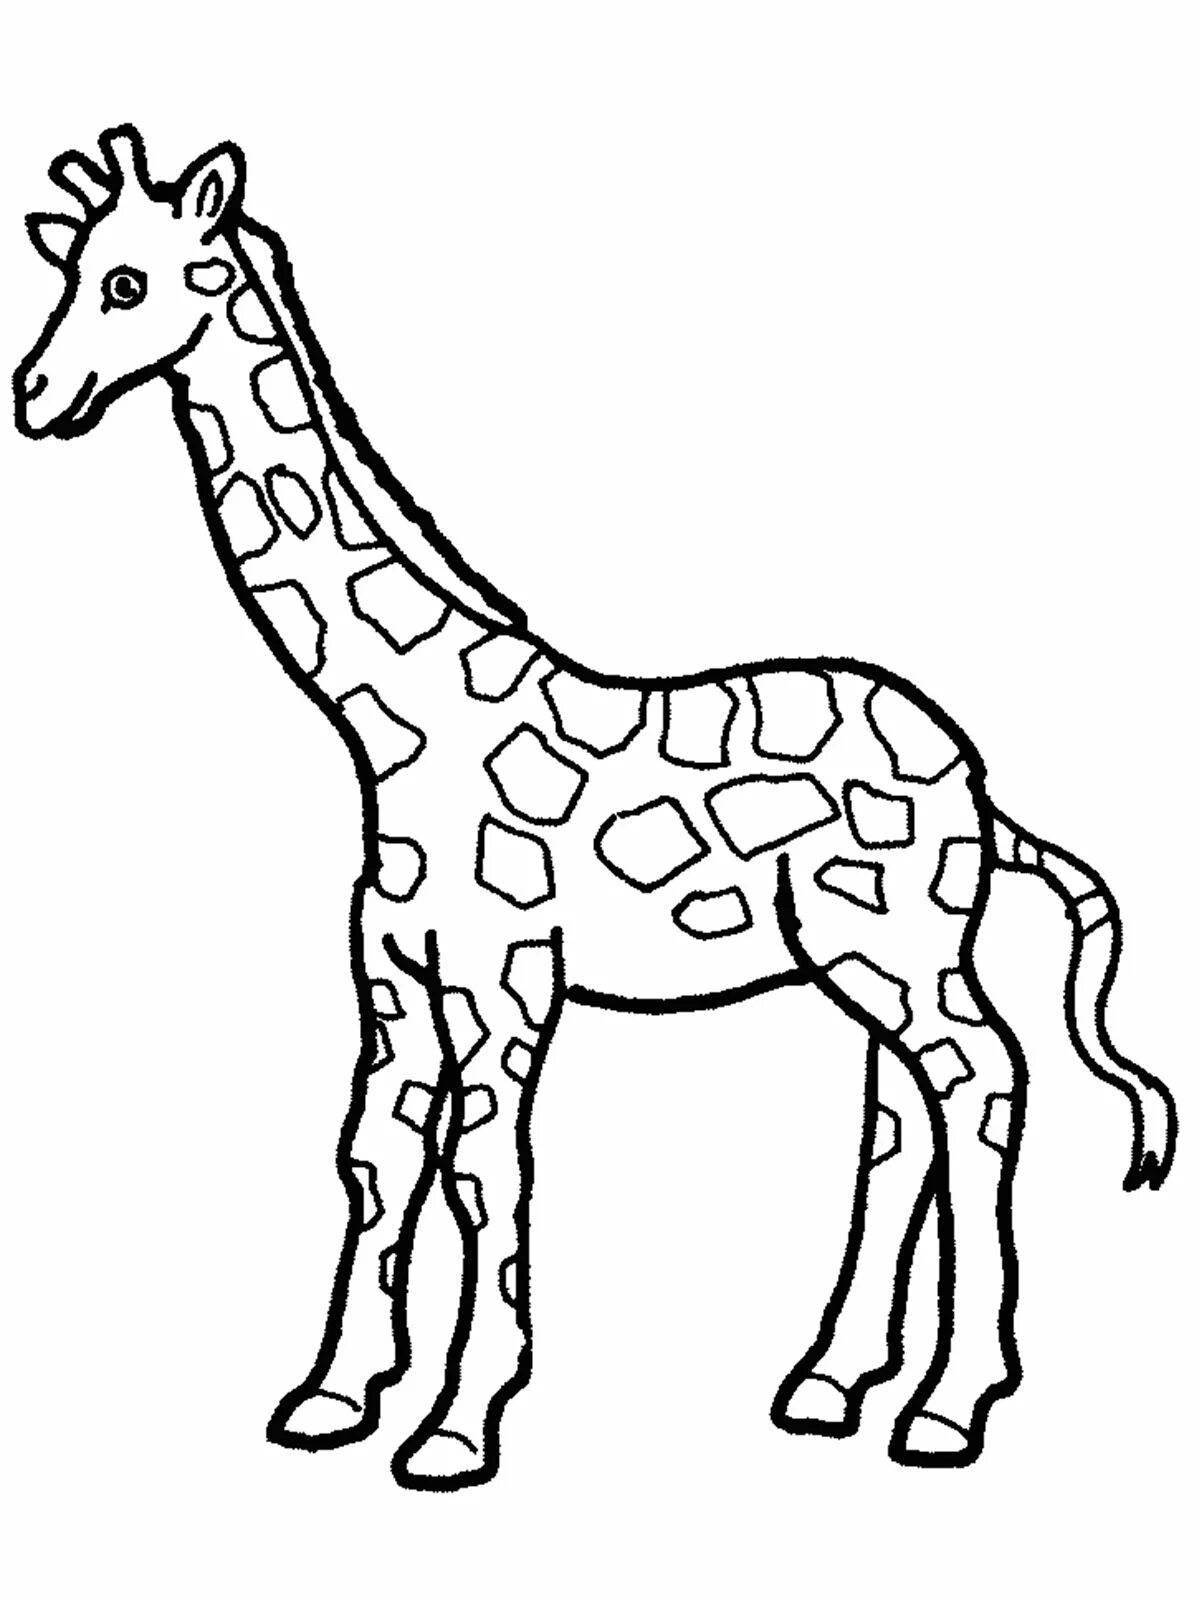 Funny giraffe coloring for kids